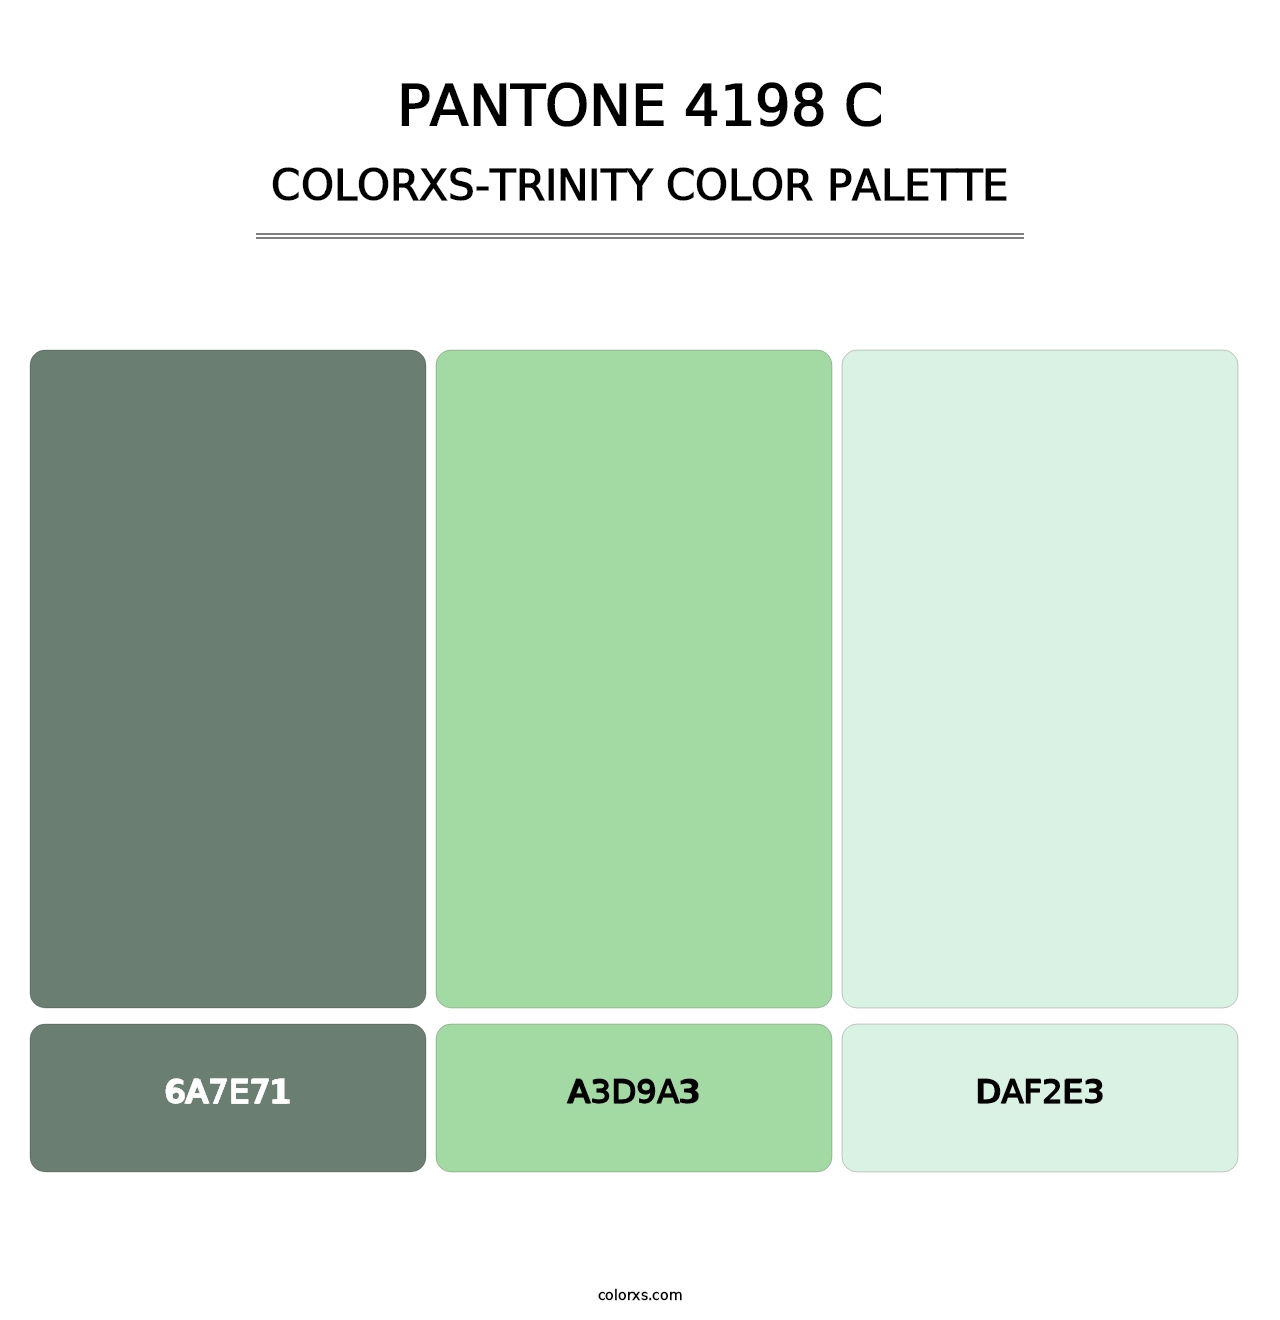 PANTONE 4198 C - Colorxs Trinity Palette